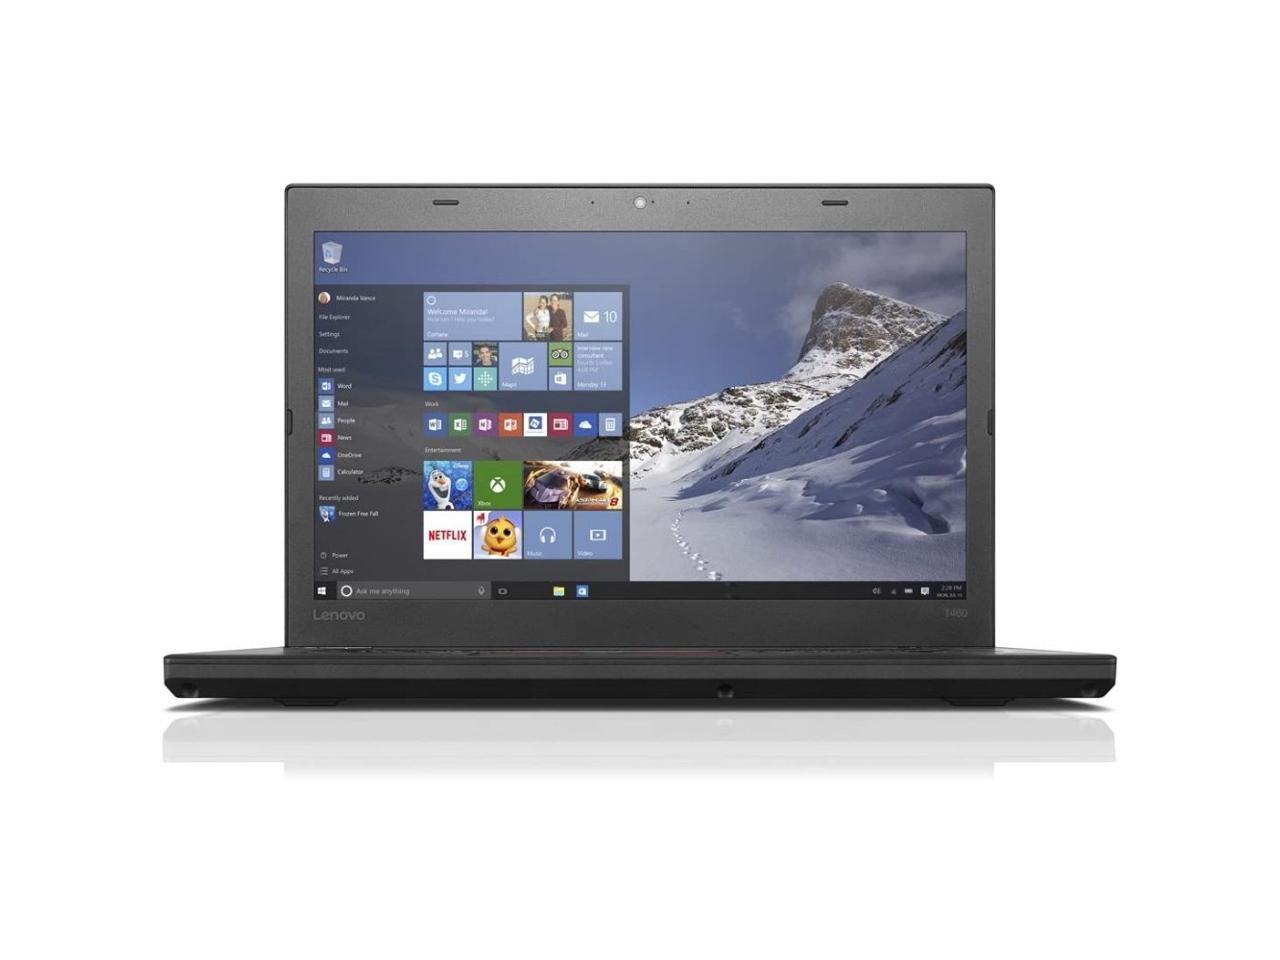 Lenovo ThinkPad T460 14.0-in Laptop - Intel Core i5 6300U 6th Gen 2.40 GHz 8GB 256GB SSD Windows 10 Pro 64-Bit - Webcam